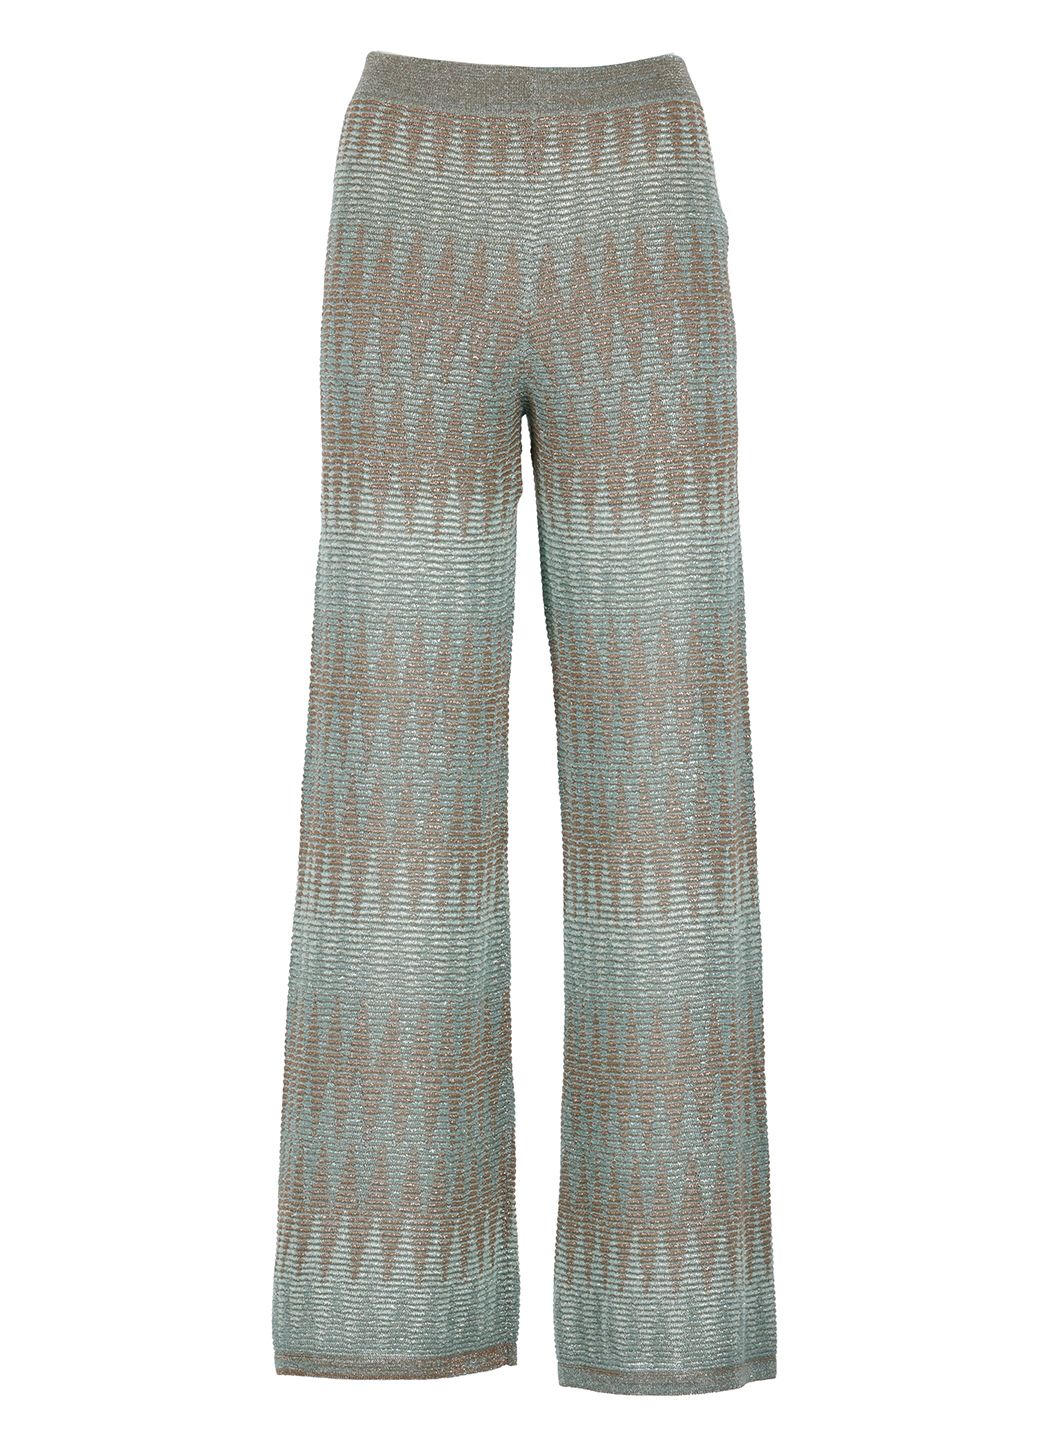 Pants with lurex details